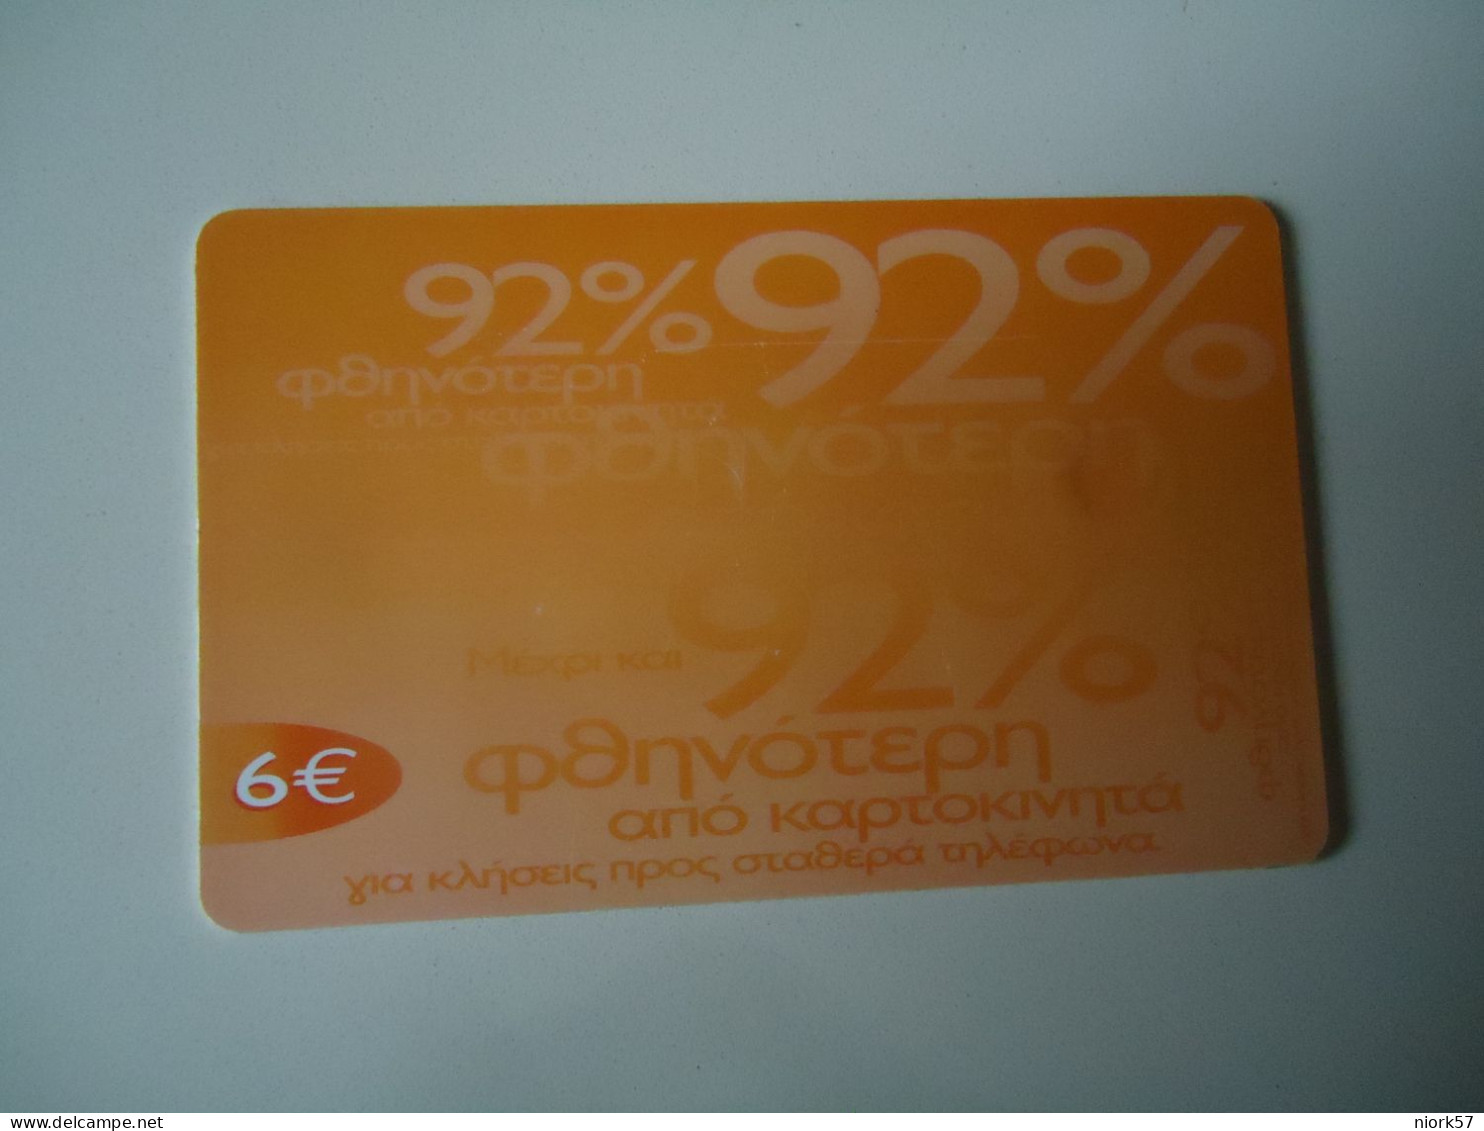 GREECE  USED CARDS  OTE 6  EYRO - Operatori Telecom